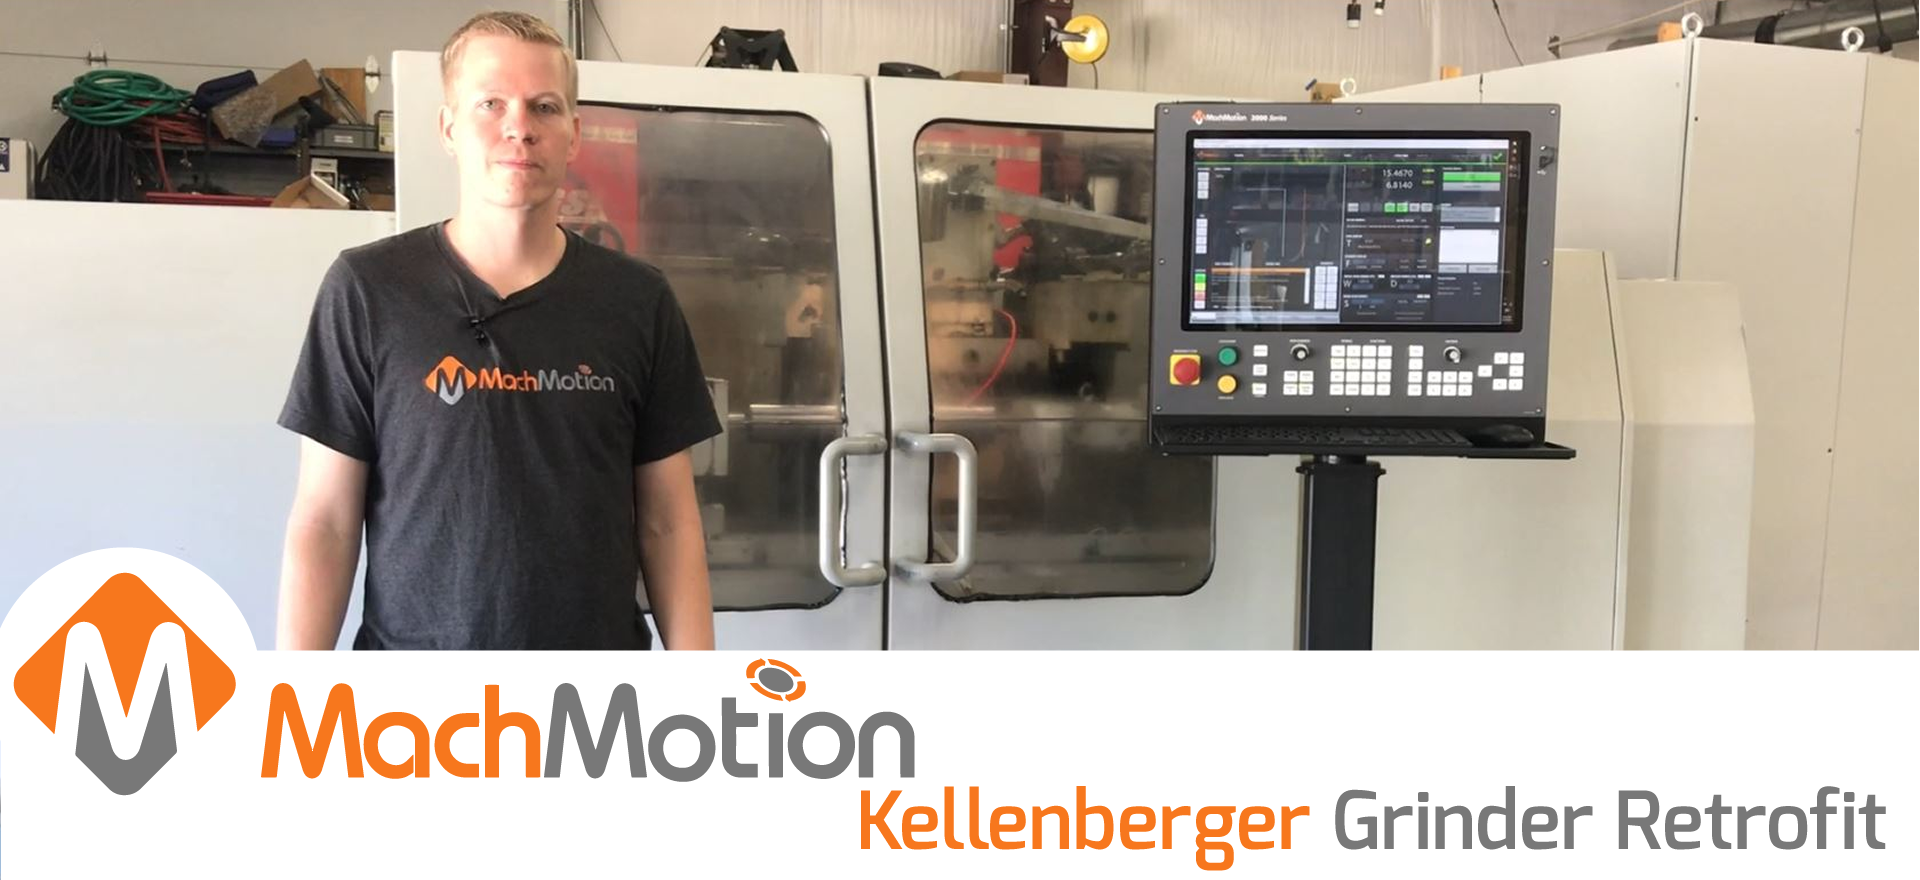 KELLENBERGER RS-M 175 / 1000 CNC GRINDER RETROFIT VIDEO